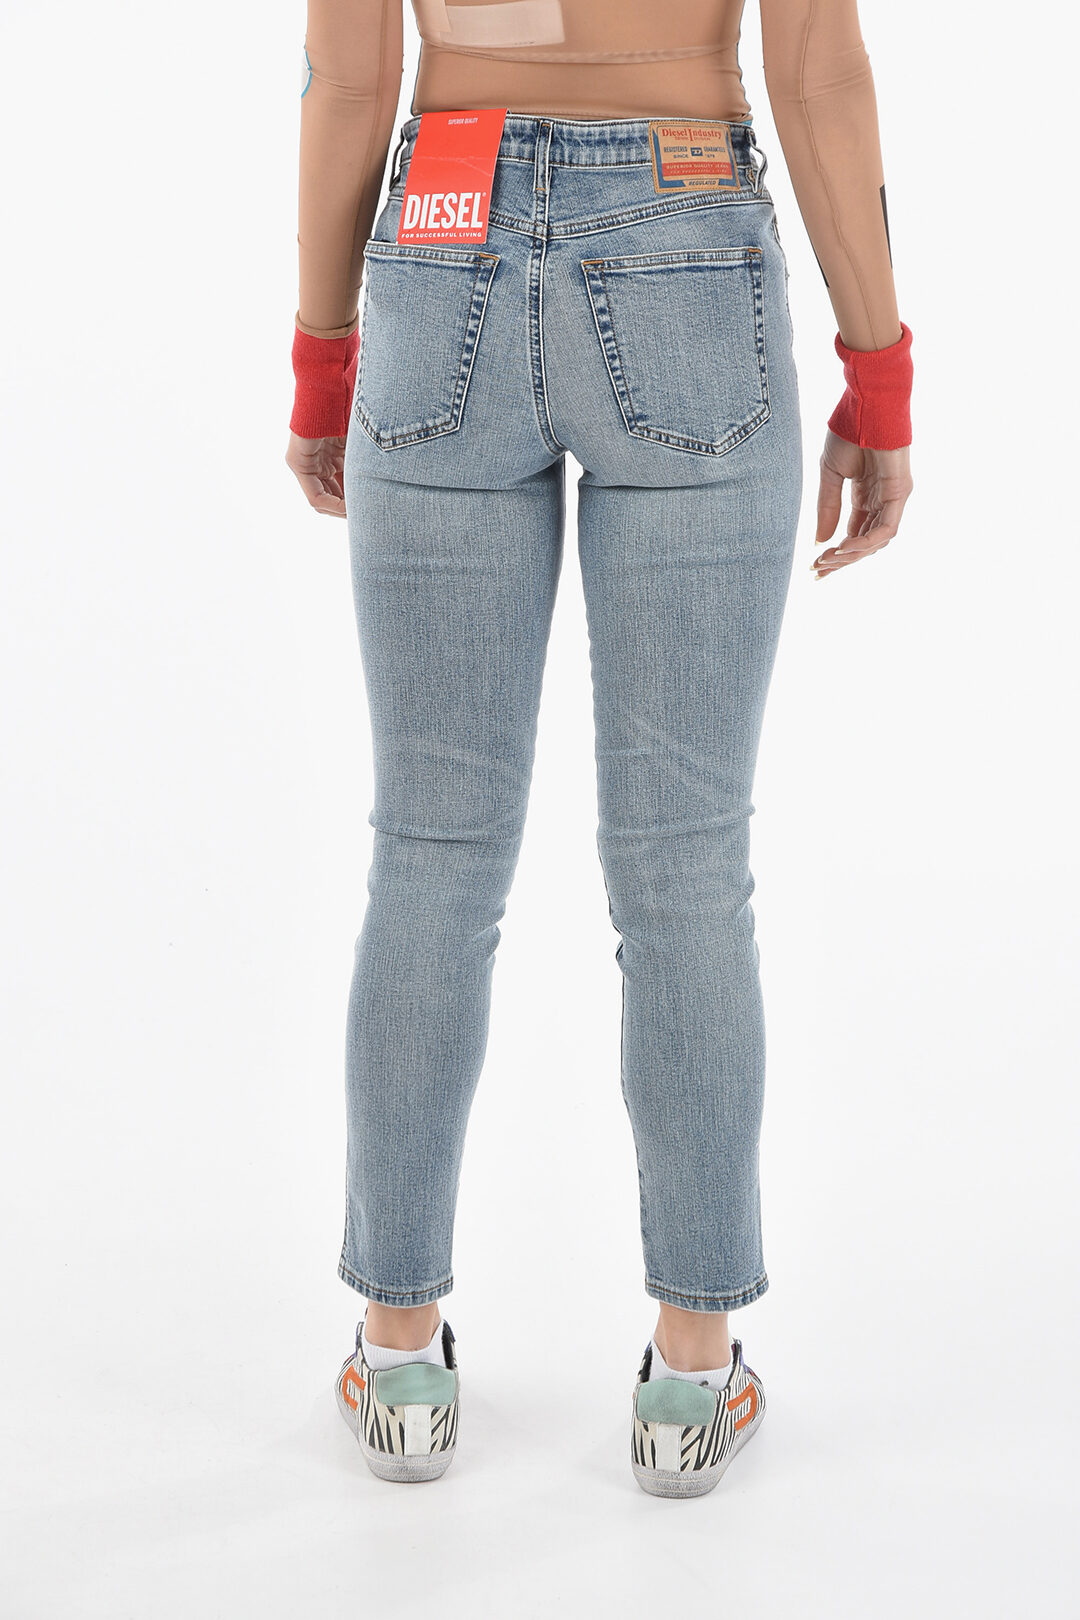 pijpleiding familie Gang Diesel RED TAG Mid-Waist 2015 BABHILA Skinny Fit Jeans 14cm L30 women -  Glamood Outlet